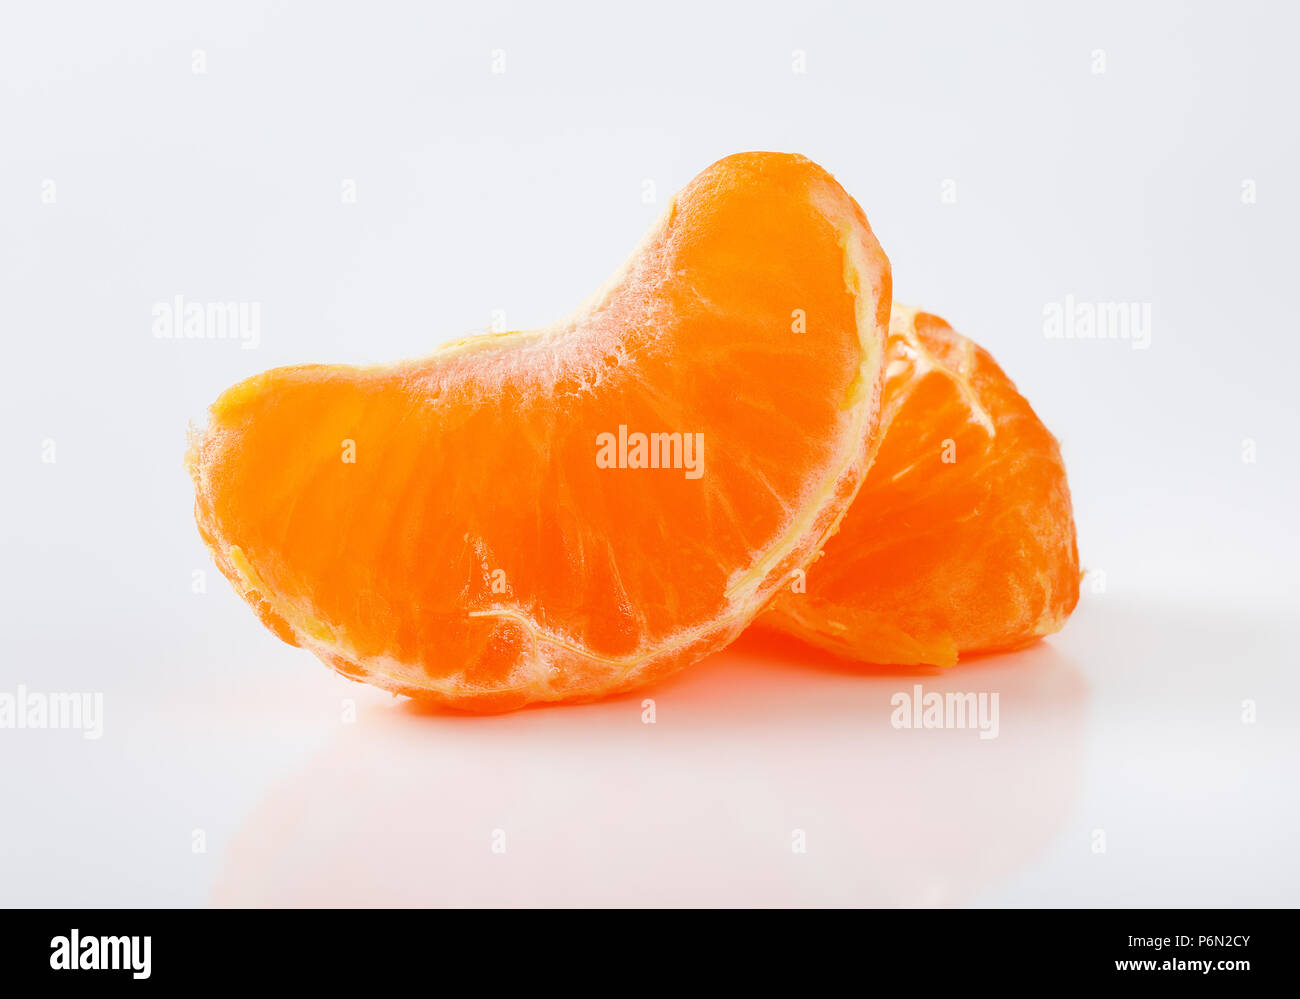 two slices of fresh tangerine on white background Stock Photo